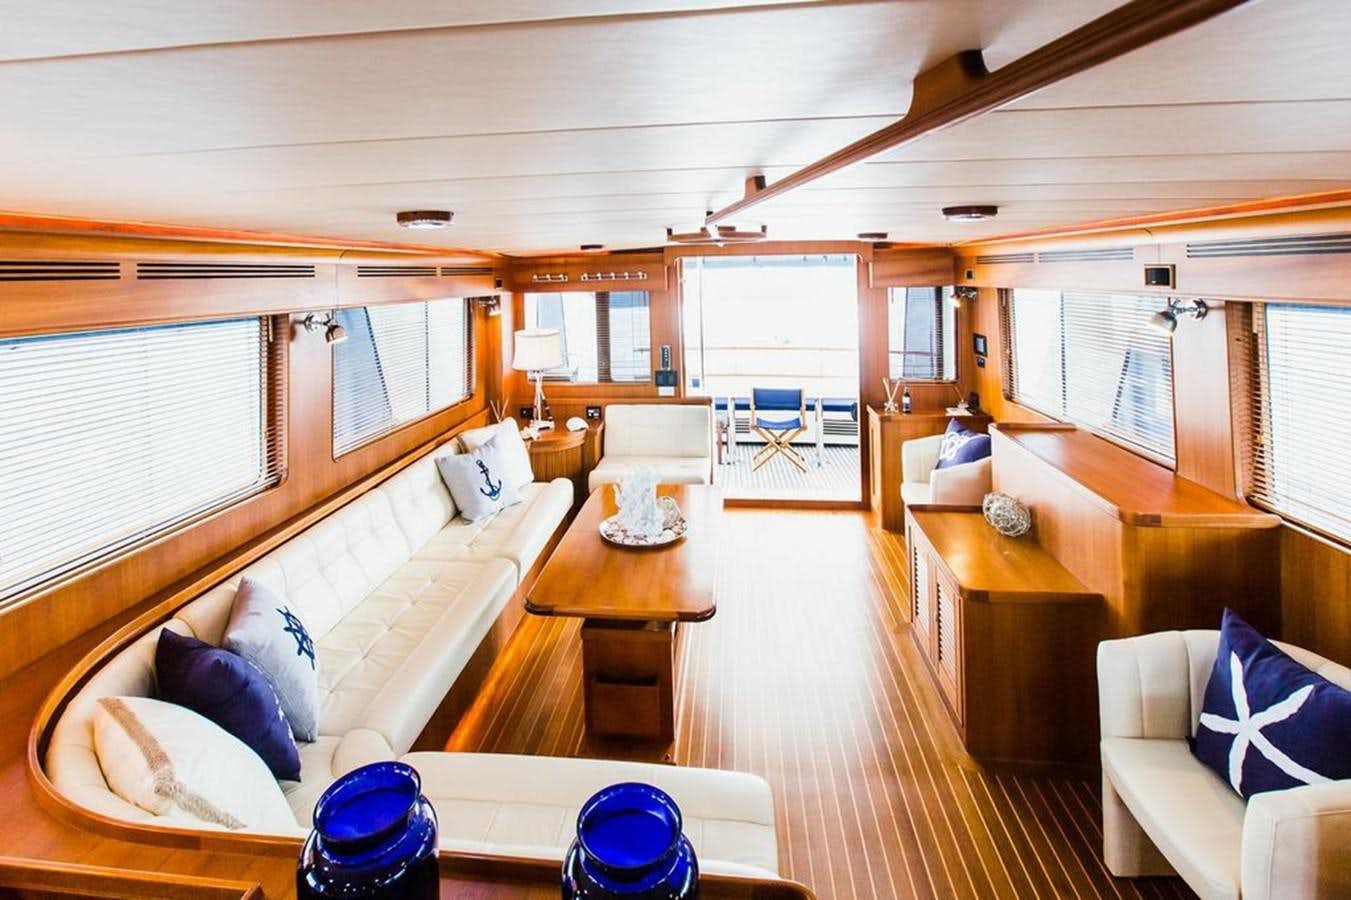 72' marlow raised pilothouse motor explorer i
Yacht for Sale